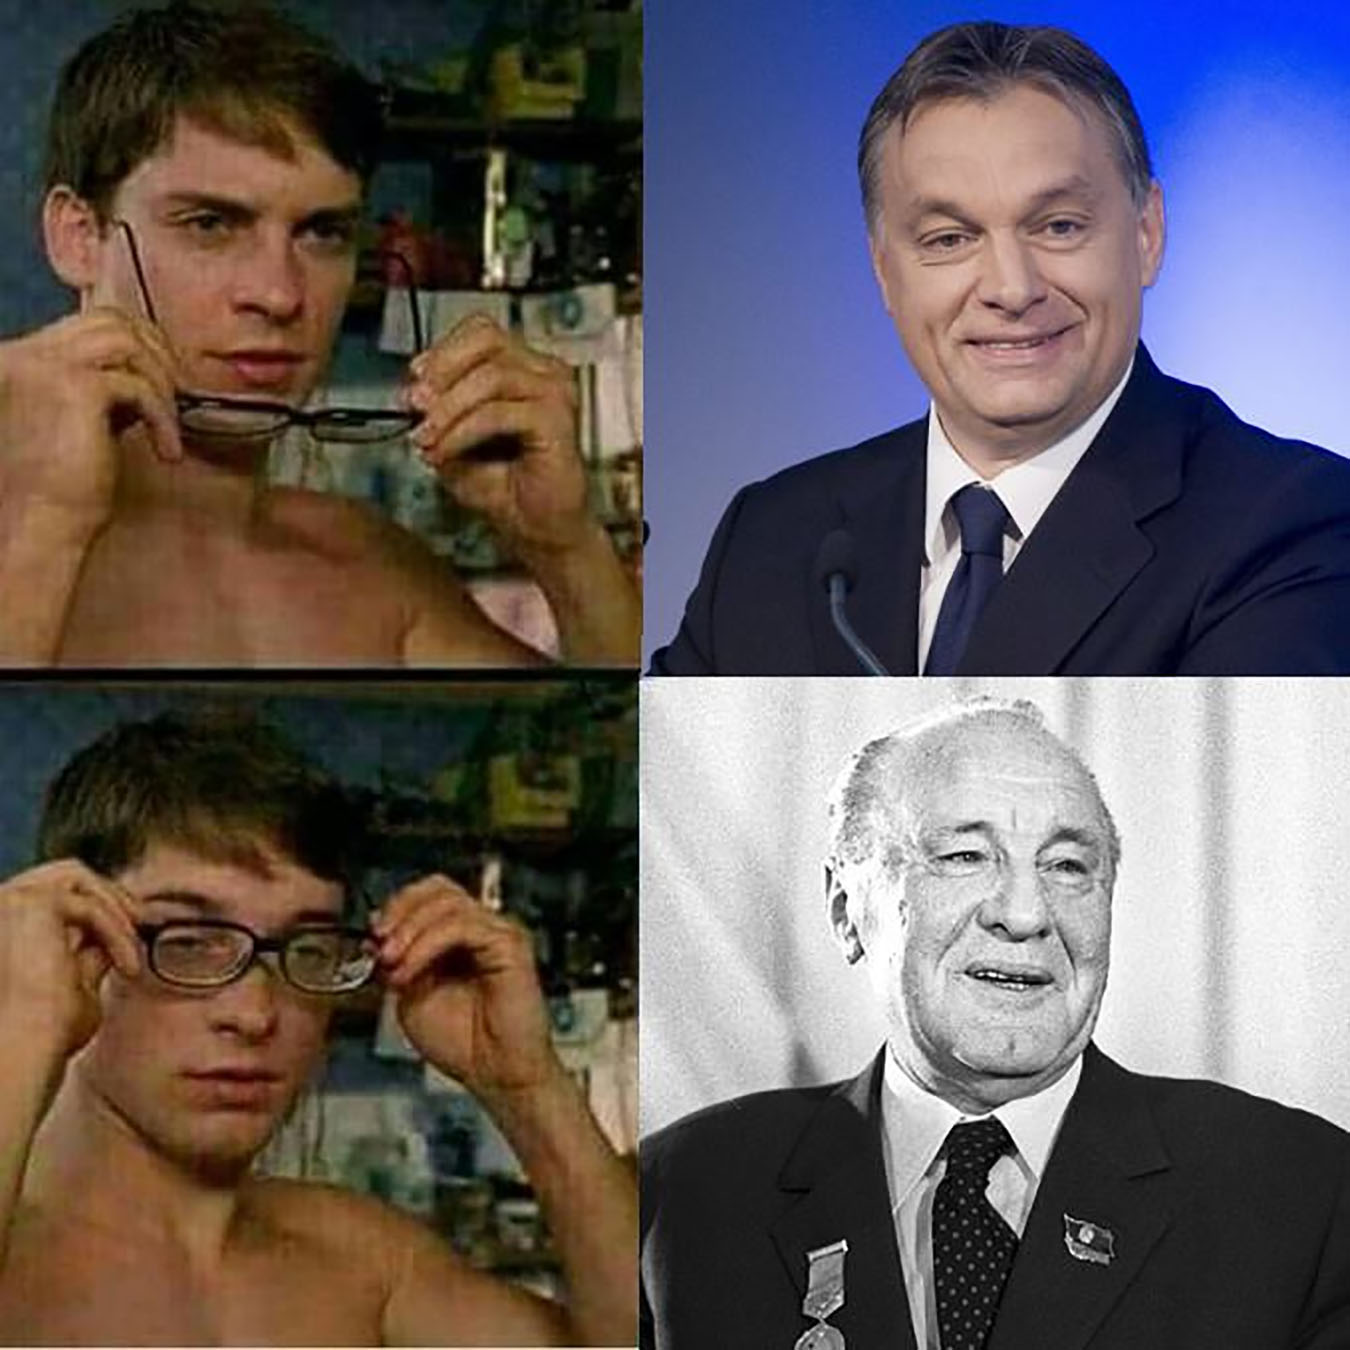 Spider-Man reveals Viktor Orbán to be communist-era ruler János Kádár.